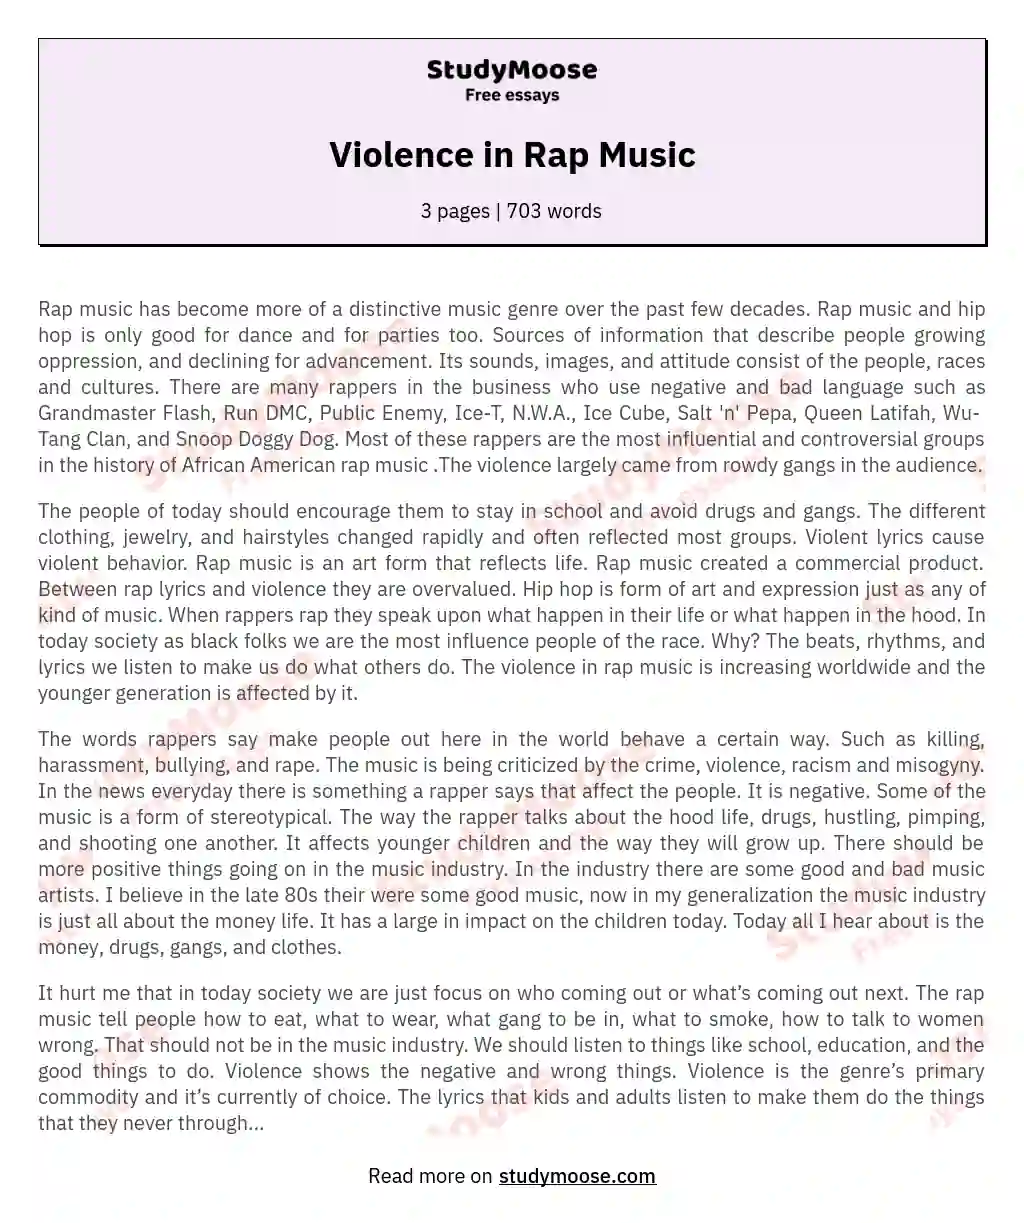 Violence in Rap Music